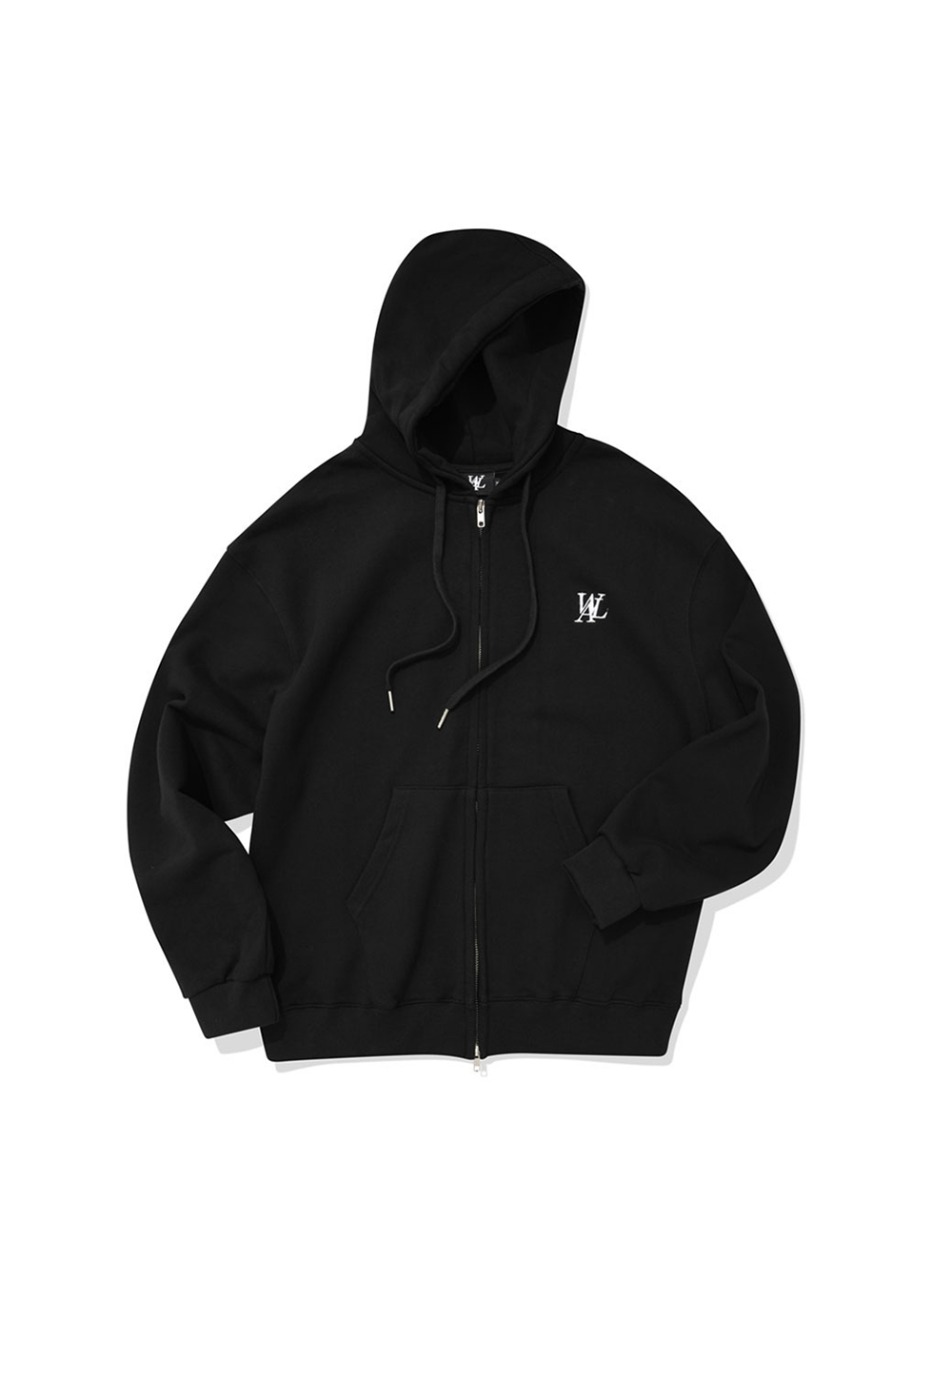 Signature hood zip-up - BLACK